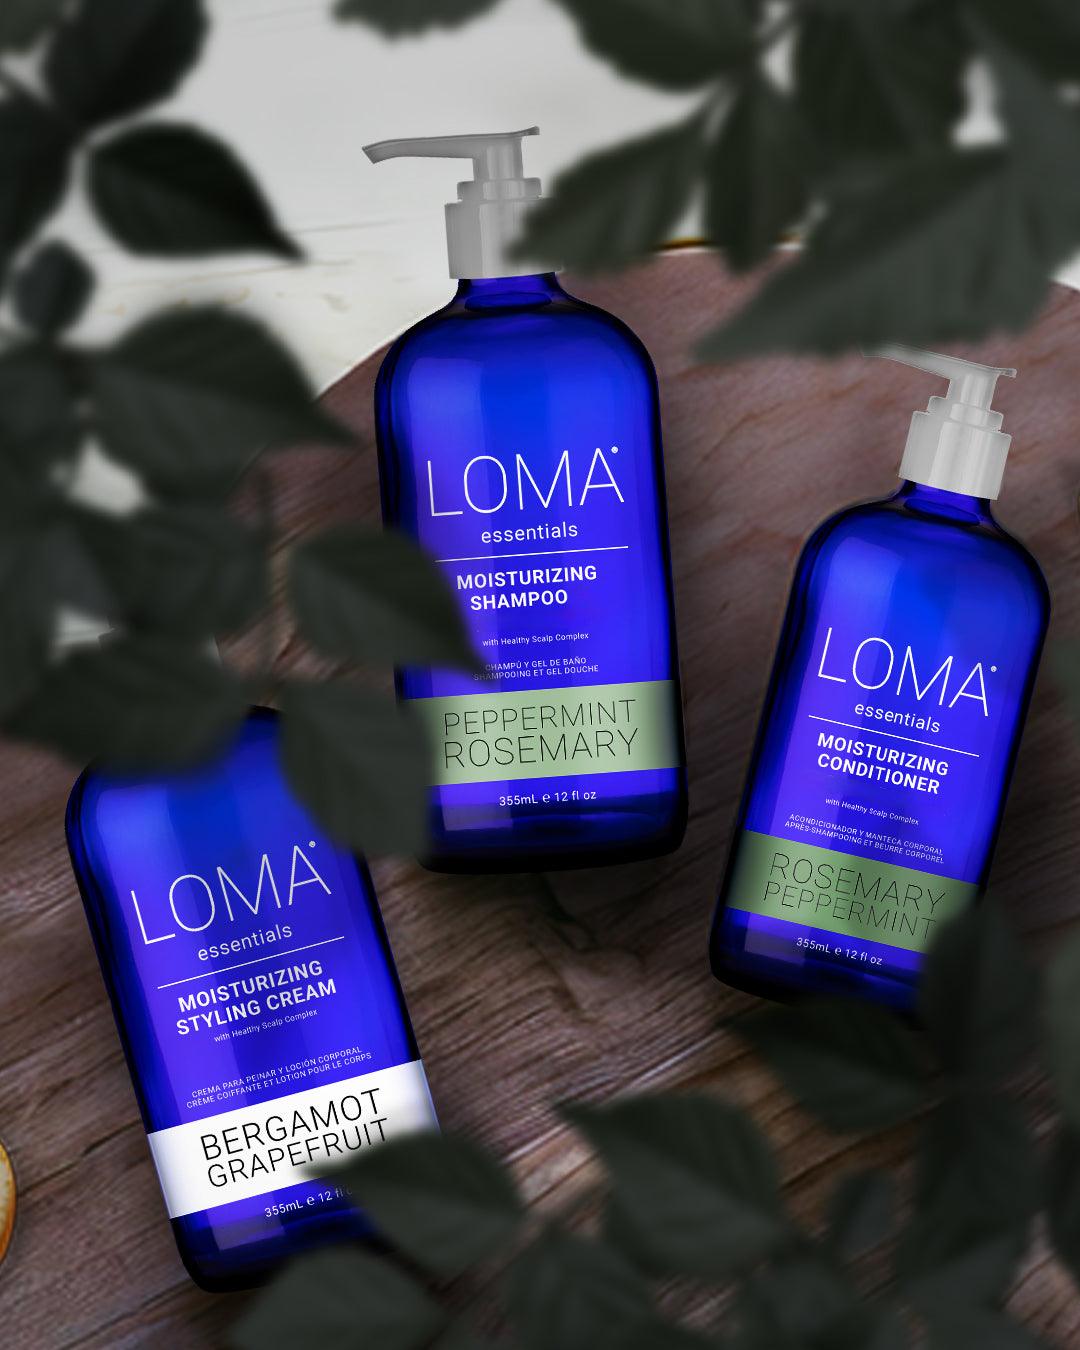 Loma Essentials Max Shine Enhancing Conditioner